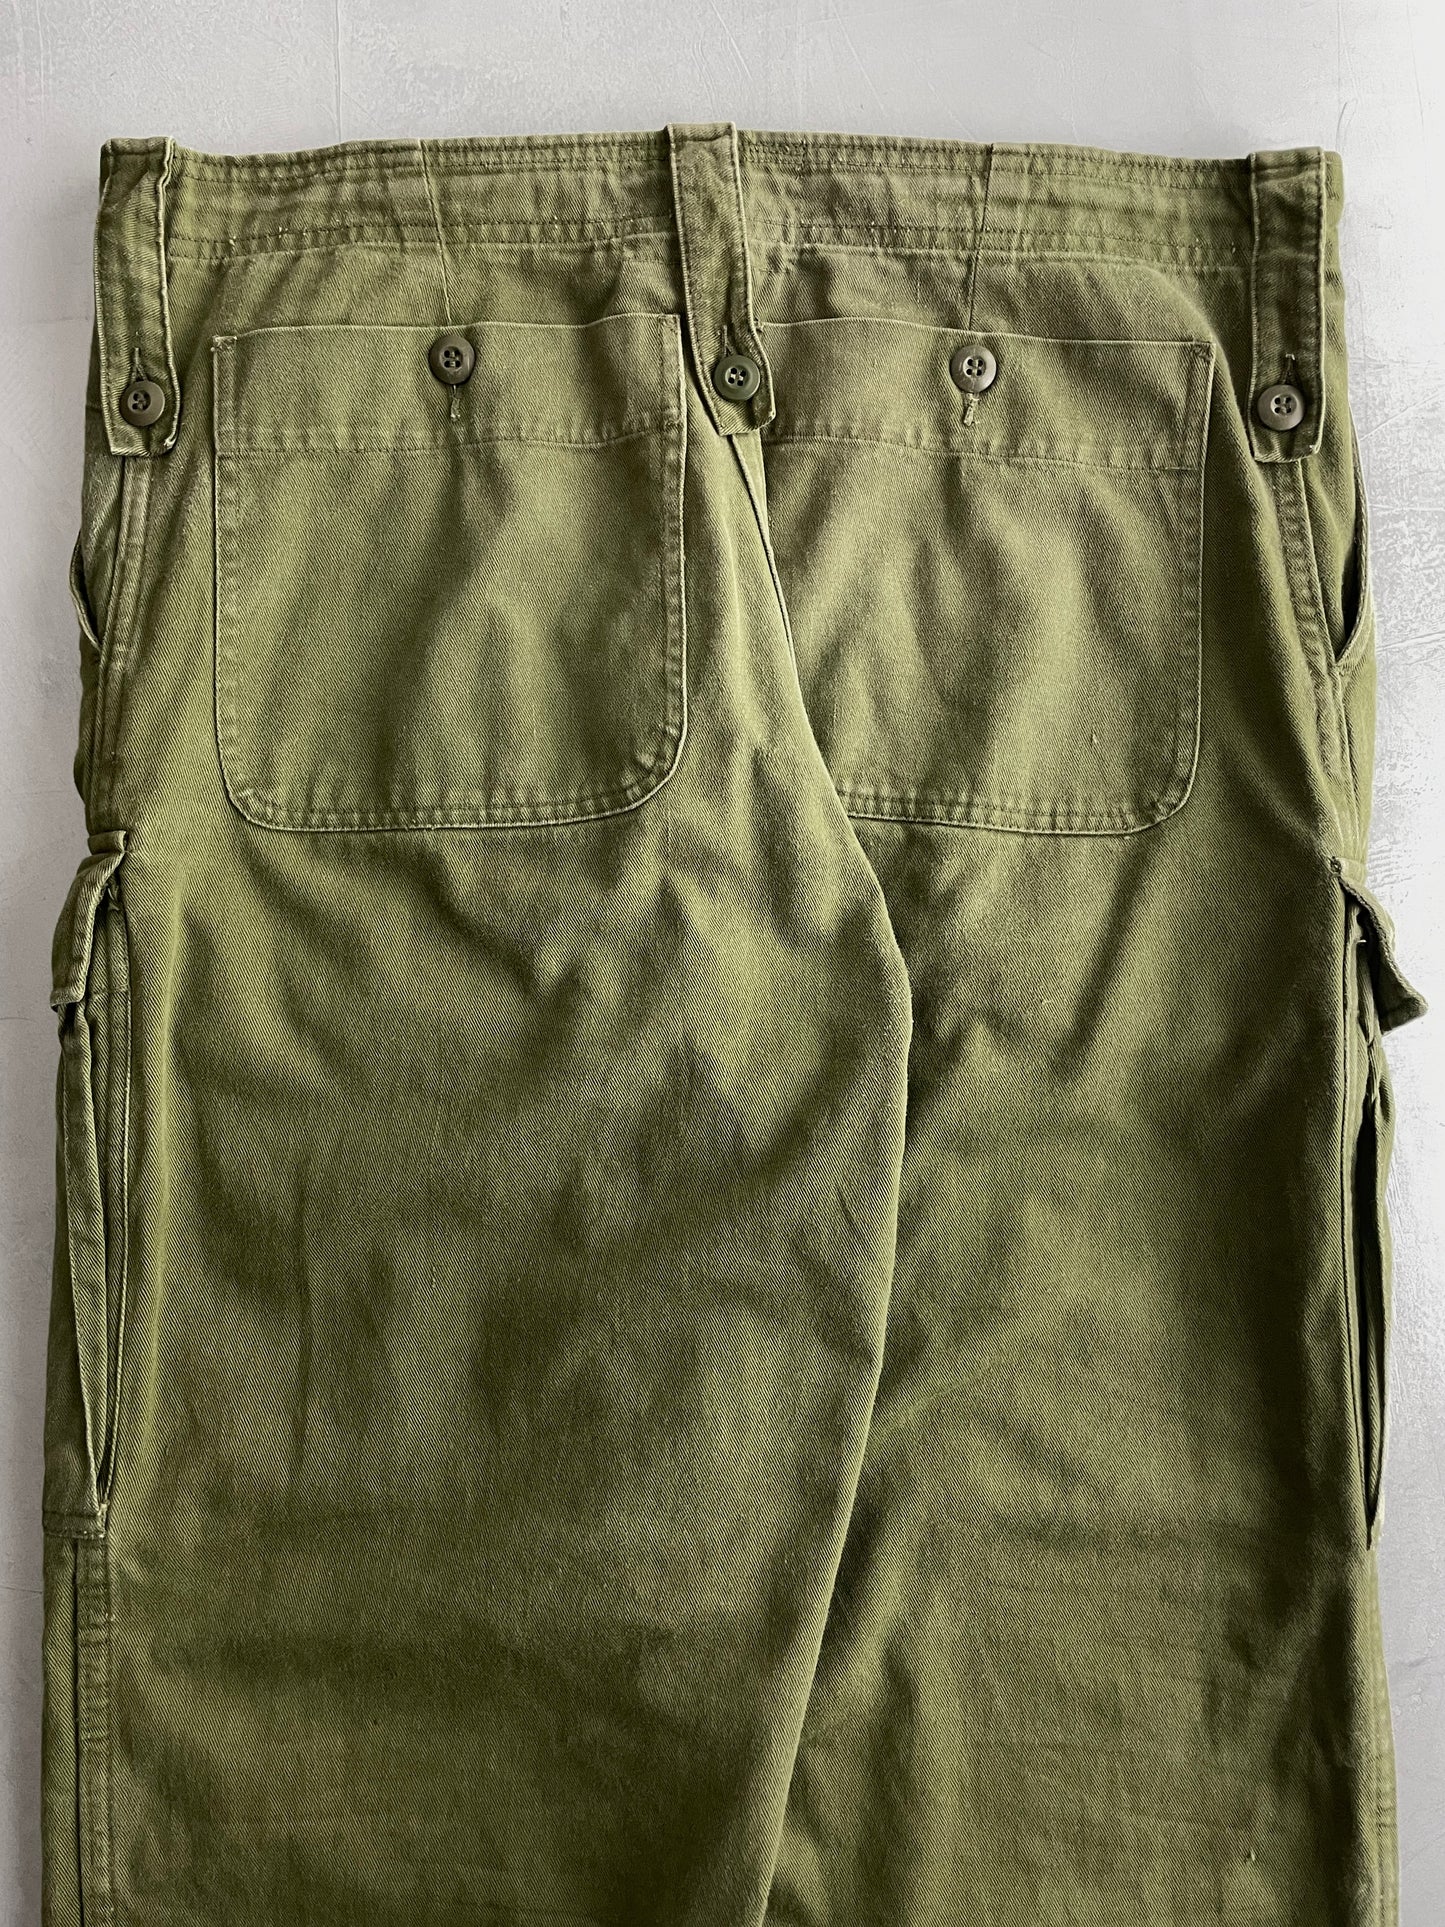 Aus Army Cargo Pants [30"]